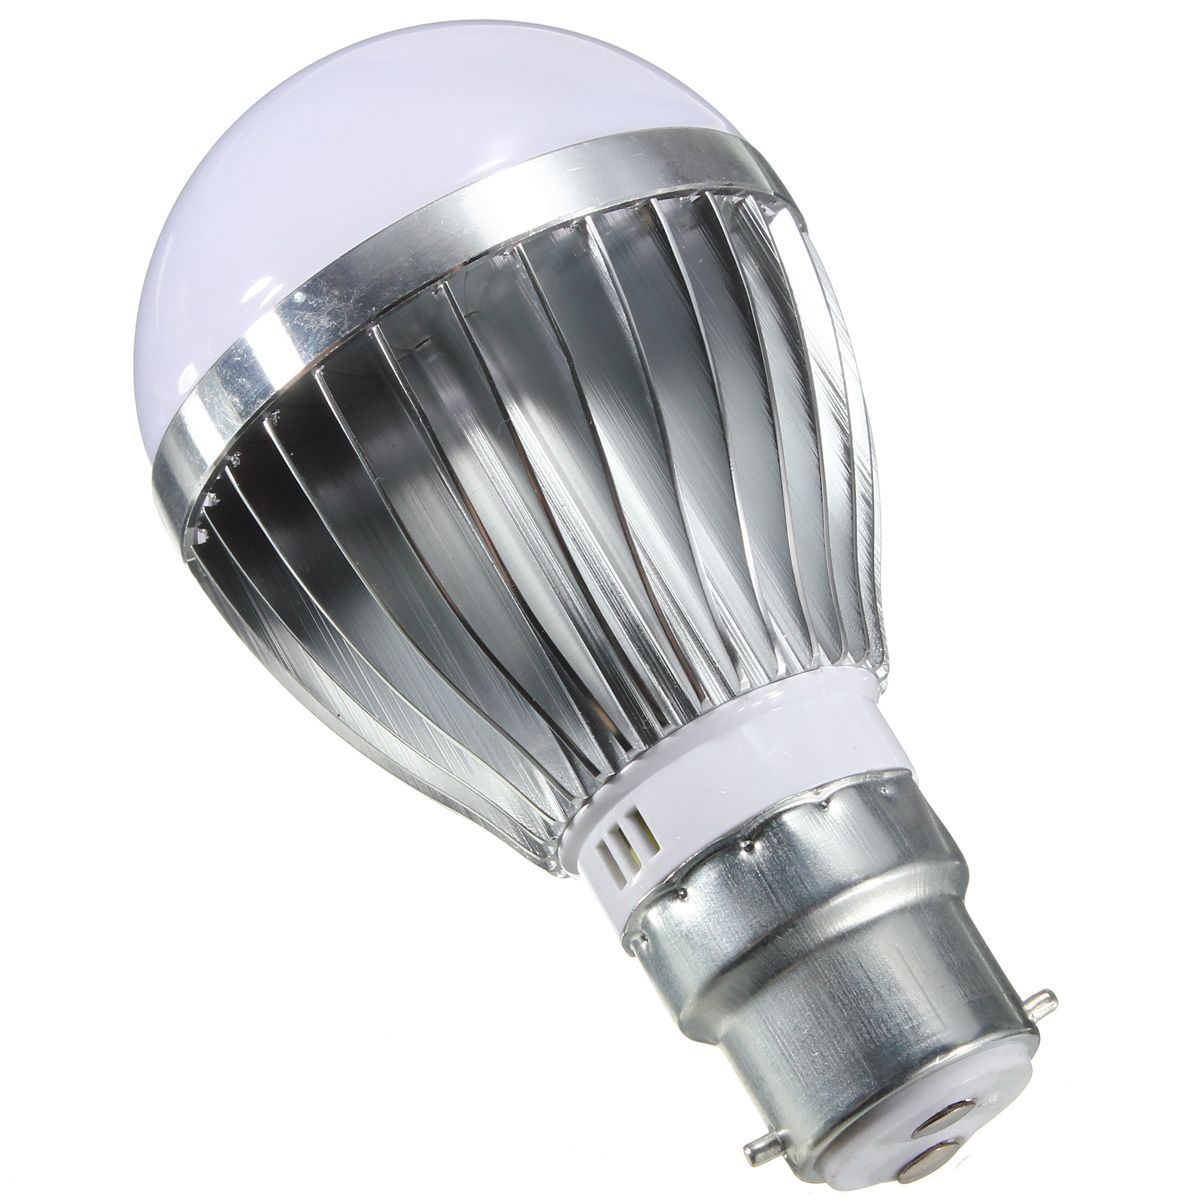 E27-B22-10W--Dimmable-14-SMD5730-LED-Bayonet-Edison-Bulb-Lamp-Globe-Light-Warm-White-AC-110-240V-1029115